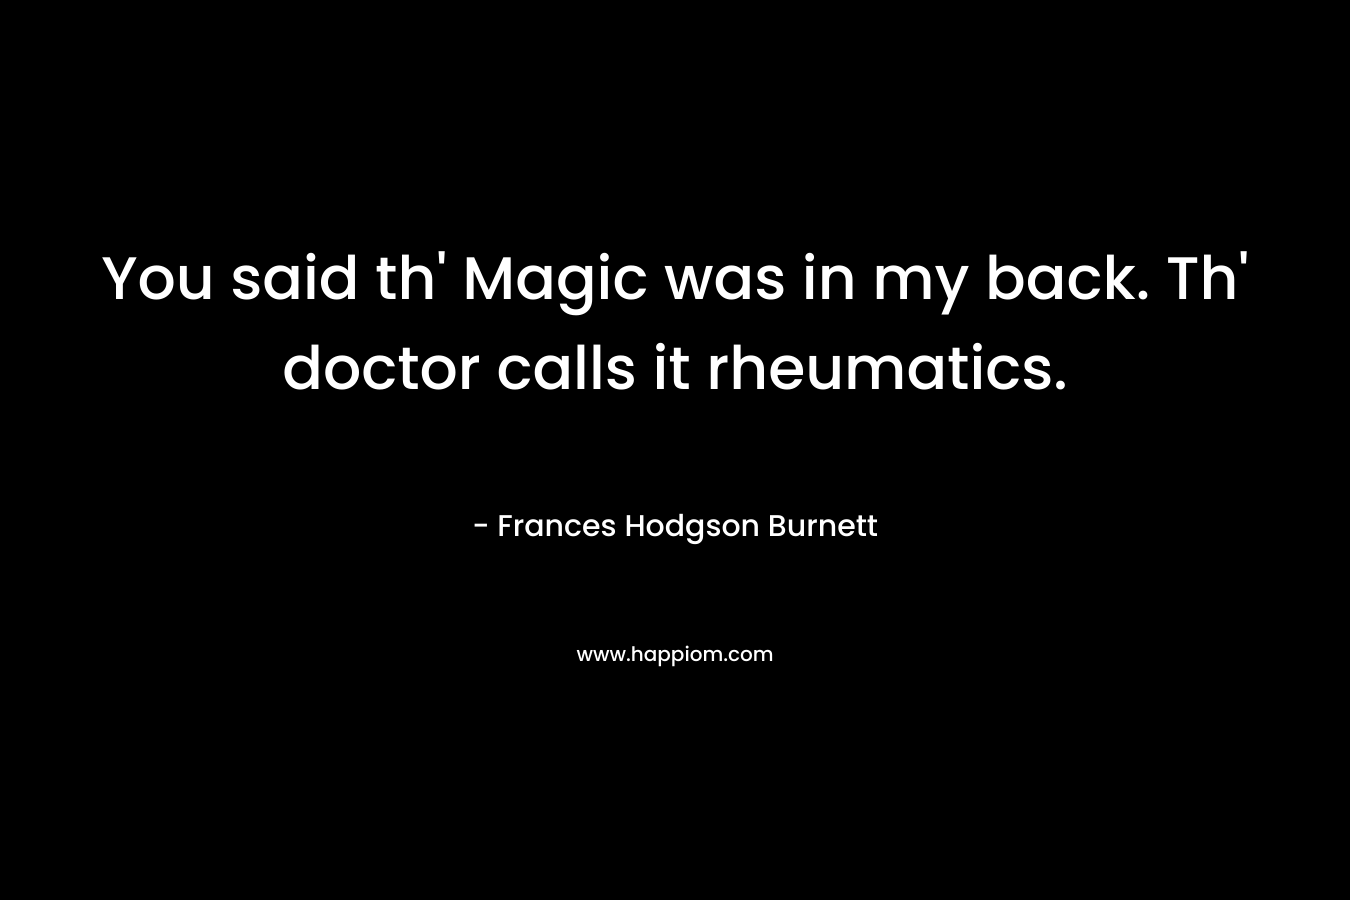 You said th' Magic was in my back. Th' doctor calls it rheumatics.